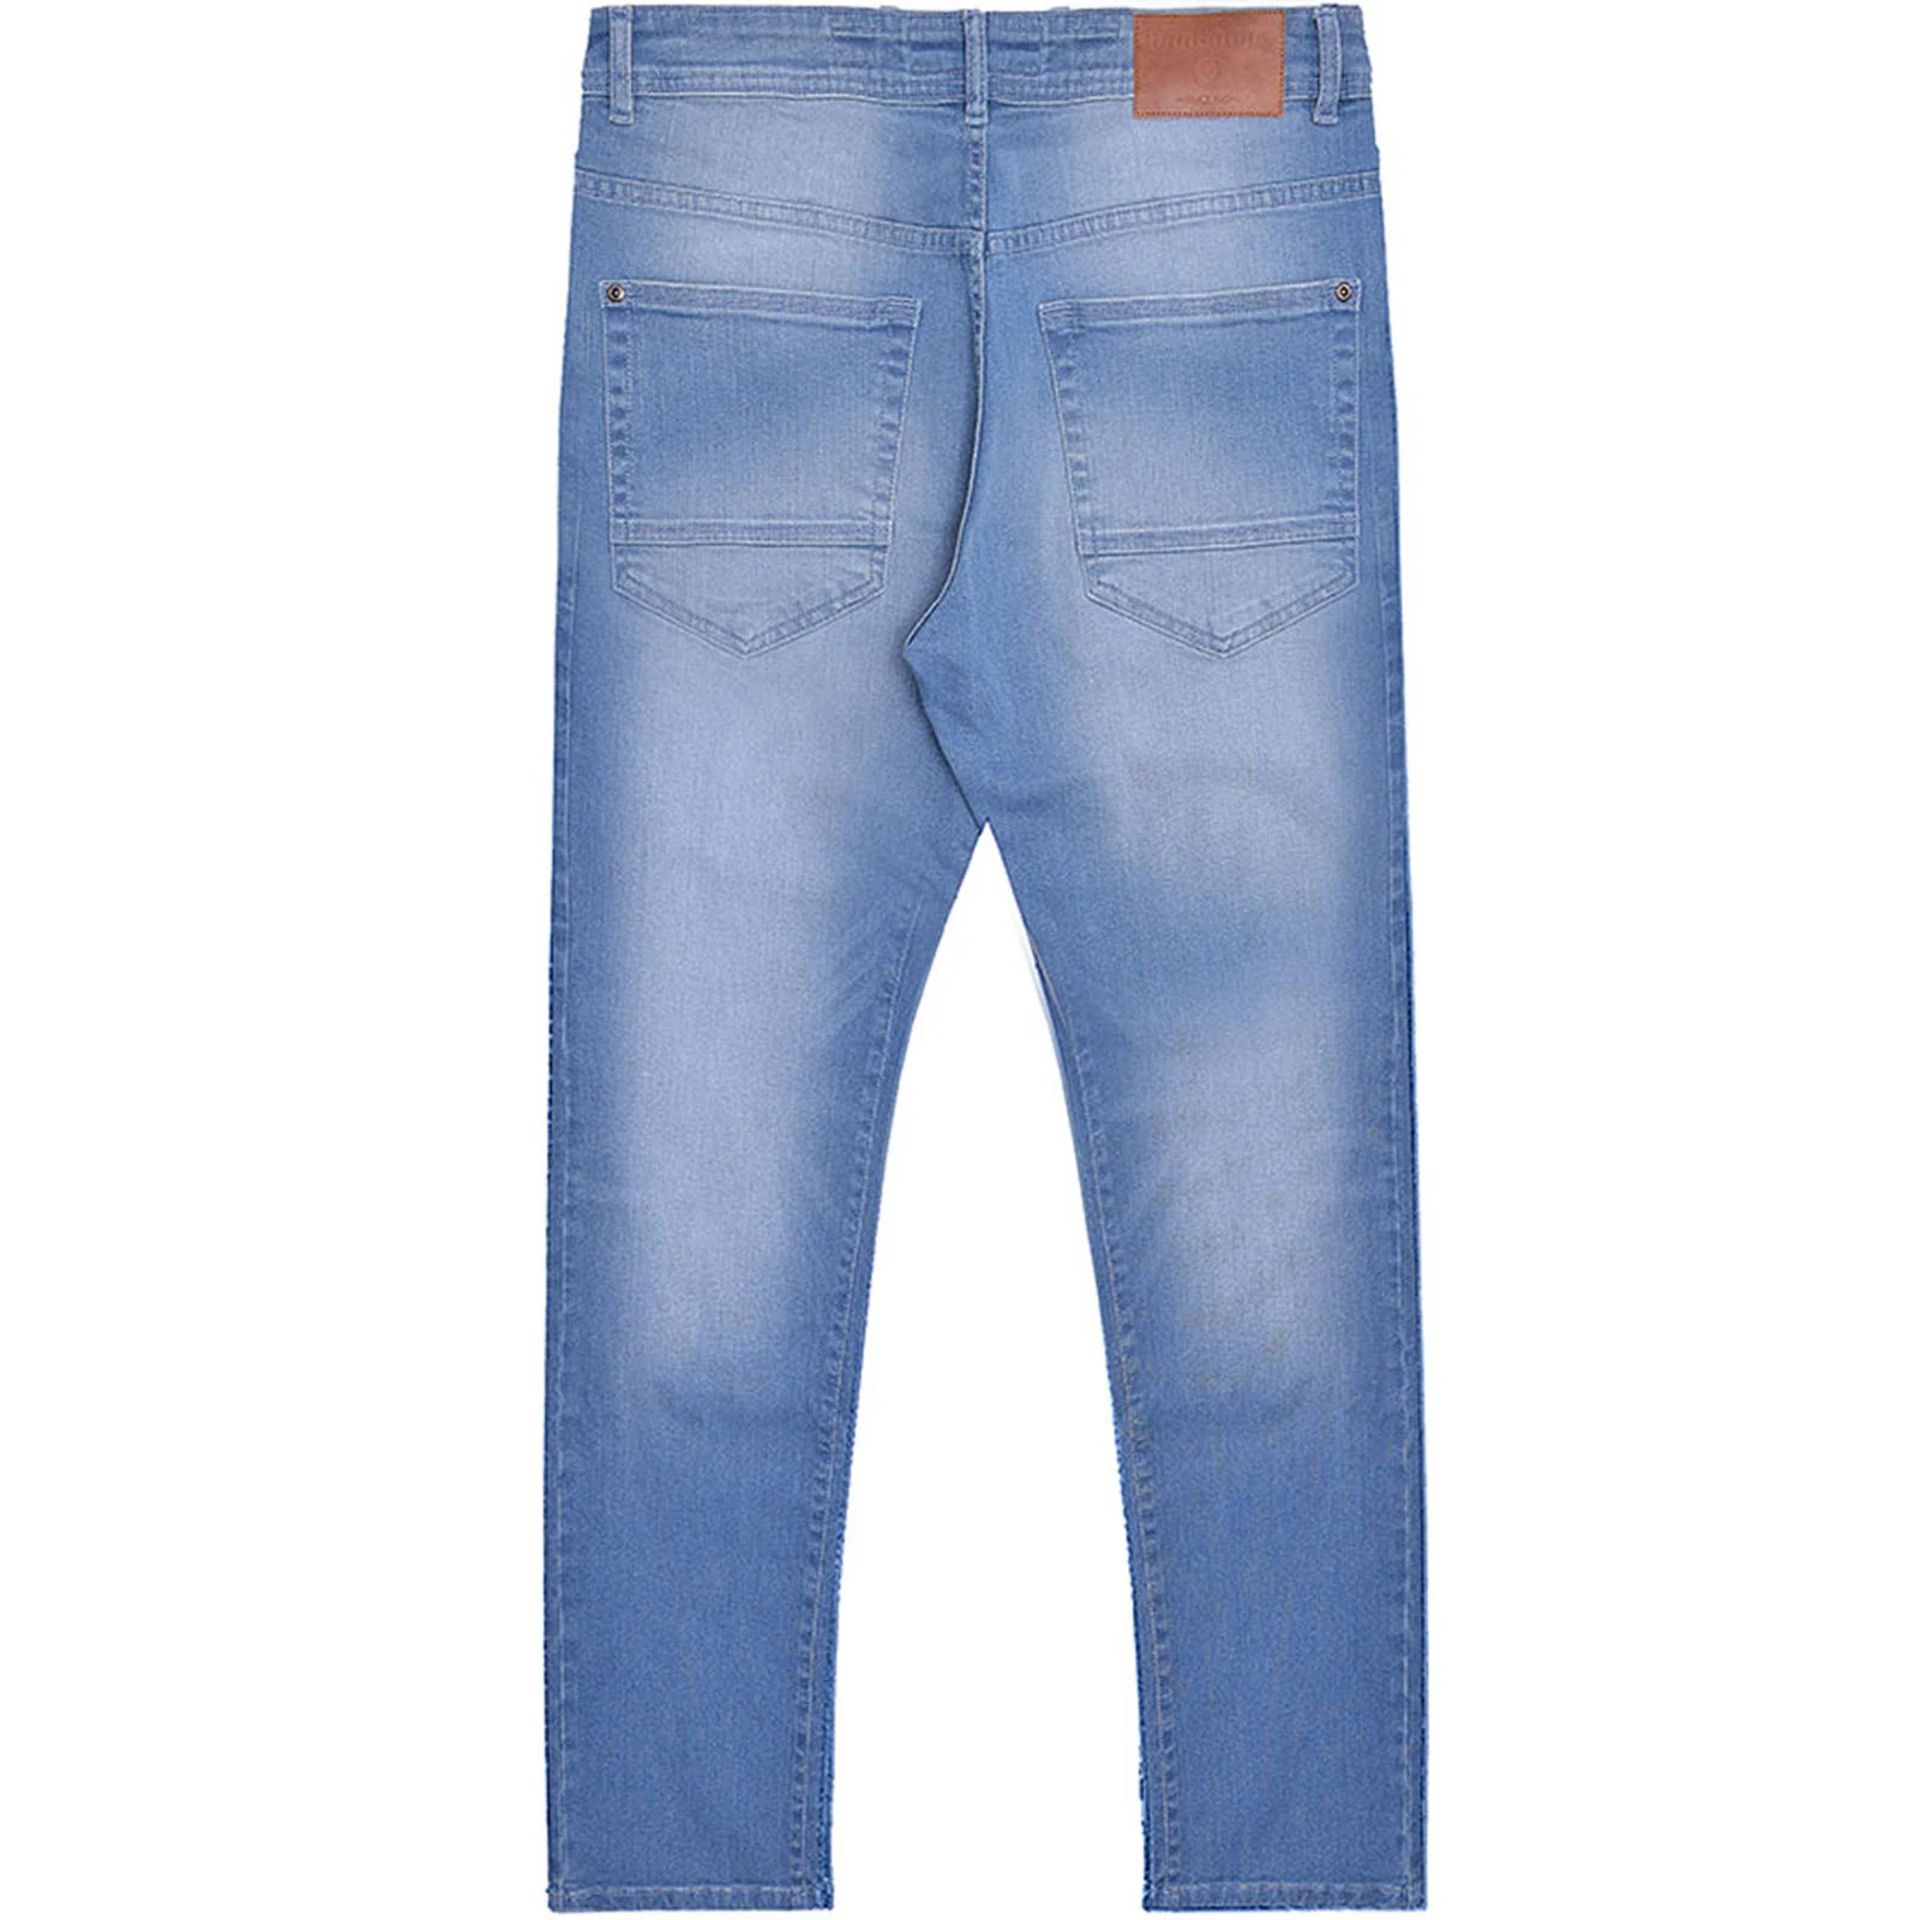 Lambretta Mens Chester Straight Fit Denim Jeans - Light Blue Size 38 RRP £60 - Image 2 of 5